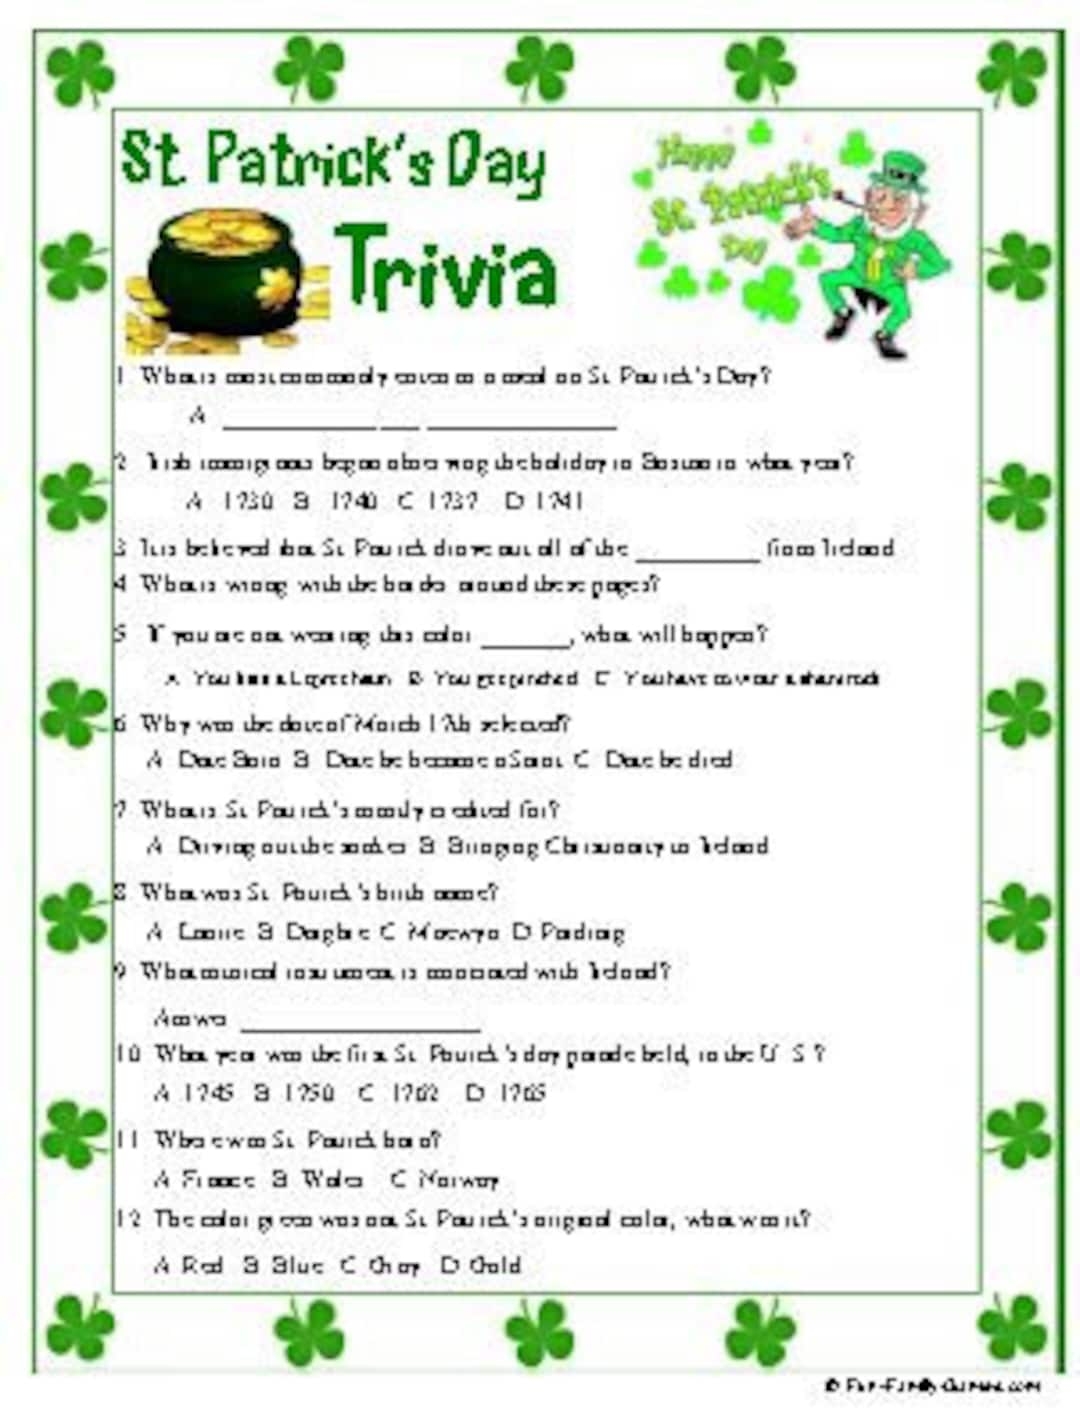 St Patrick s Day Trivia Etsy